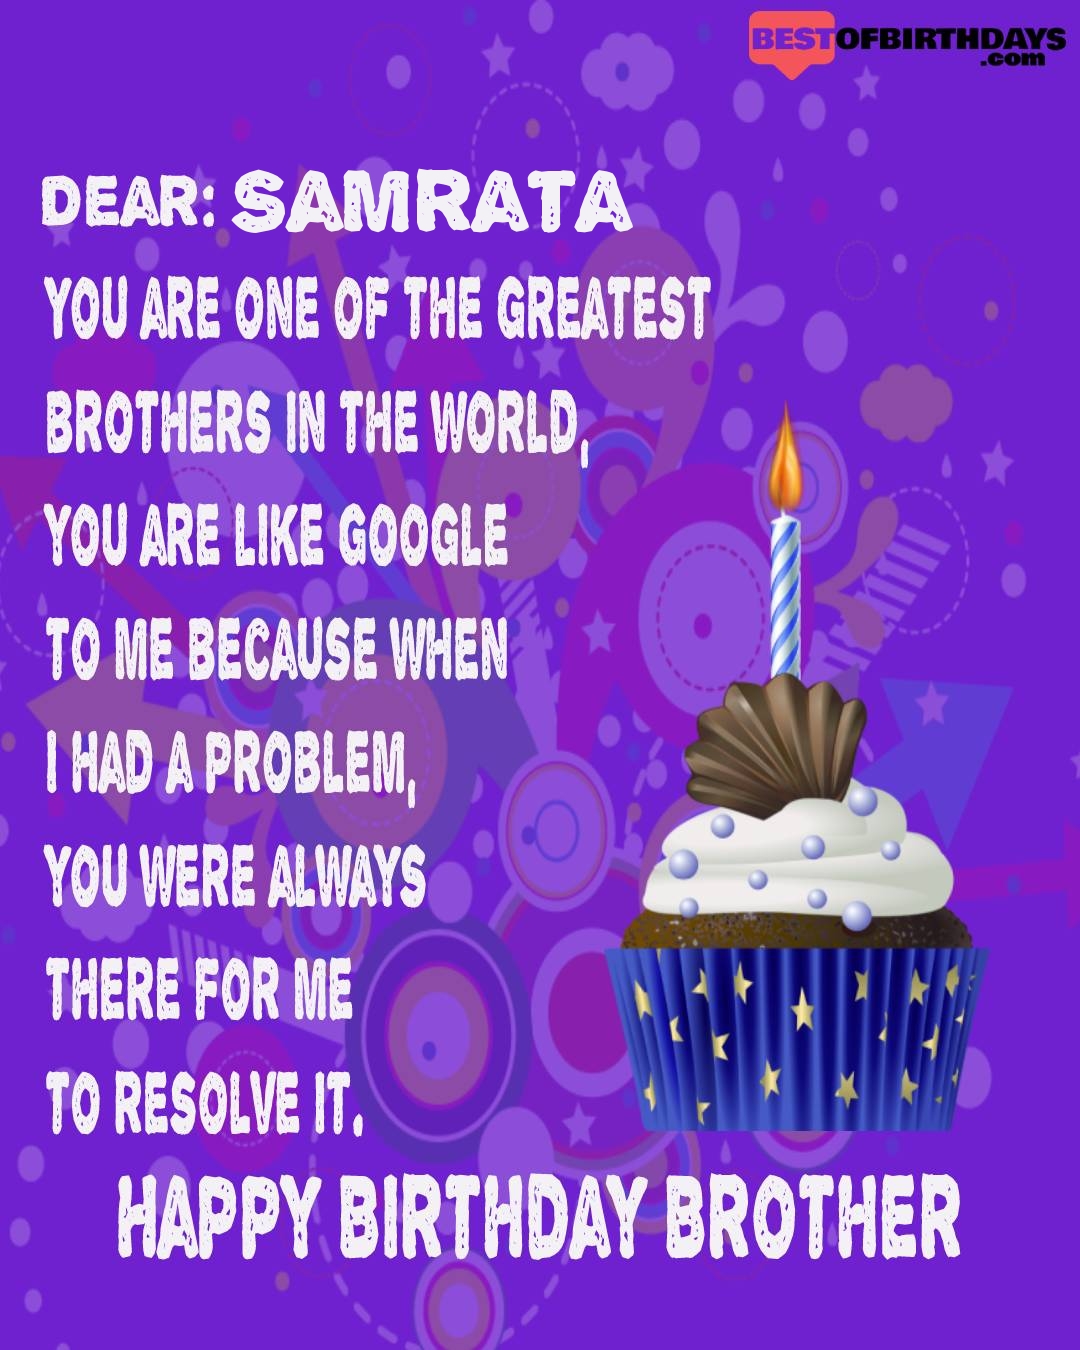 Happy birthday samrata bhai brother bro